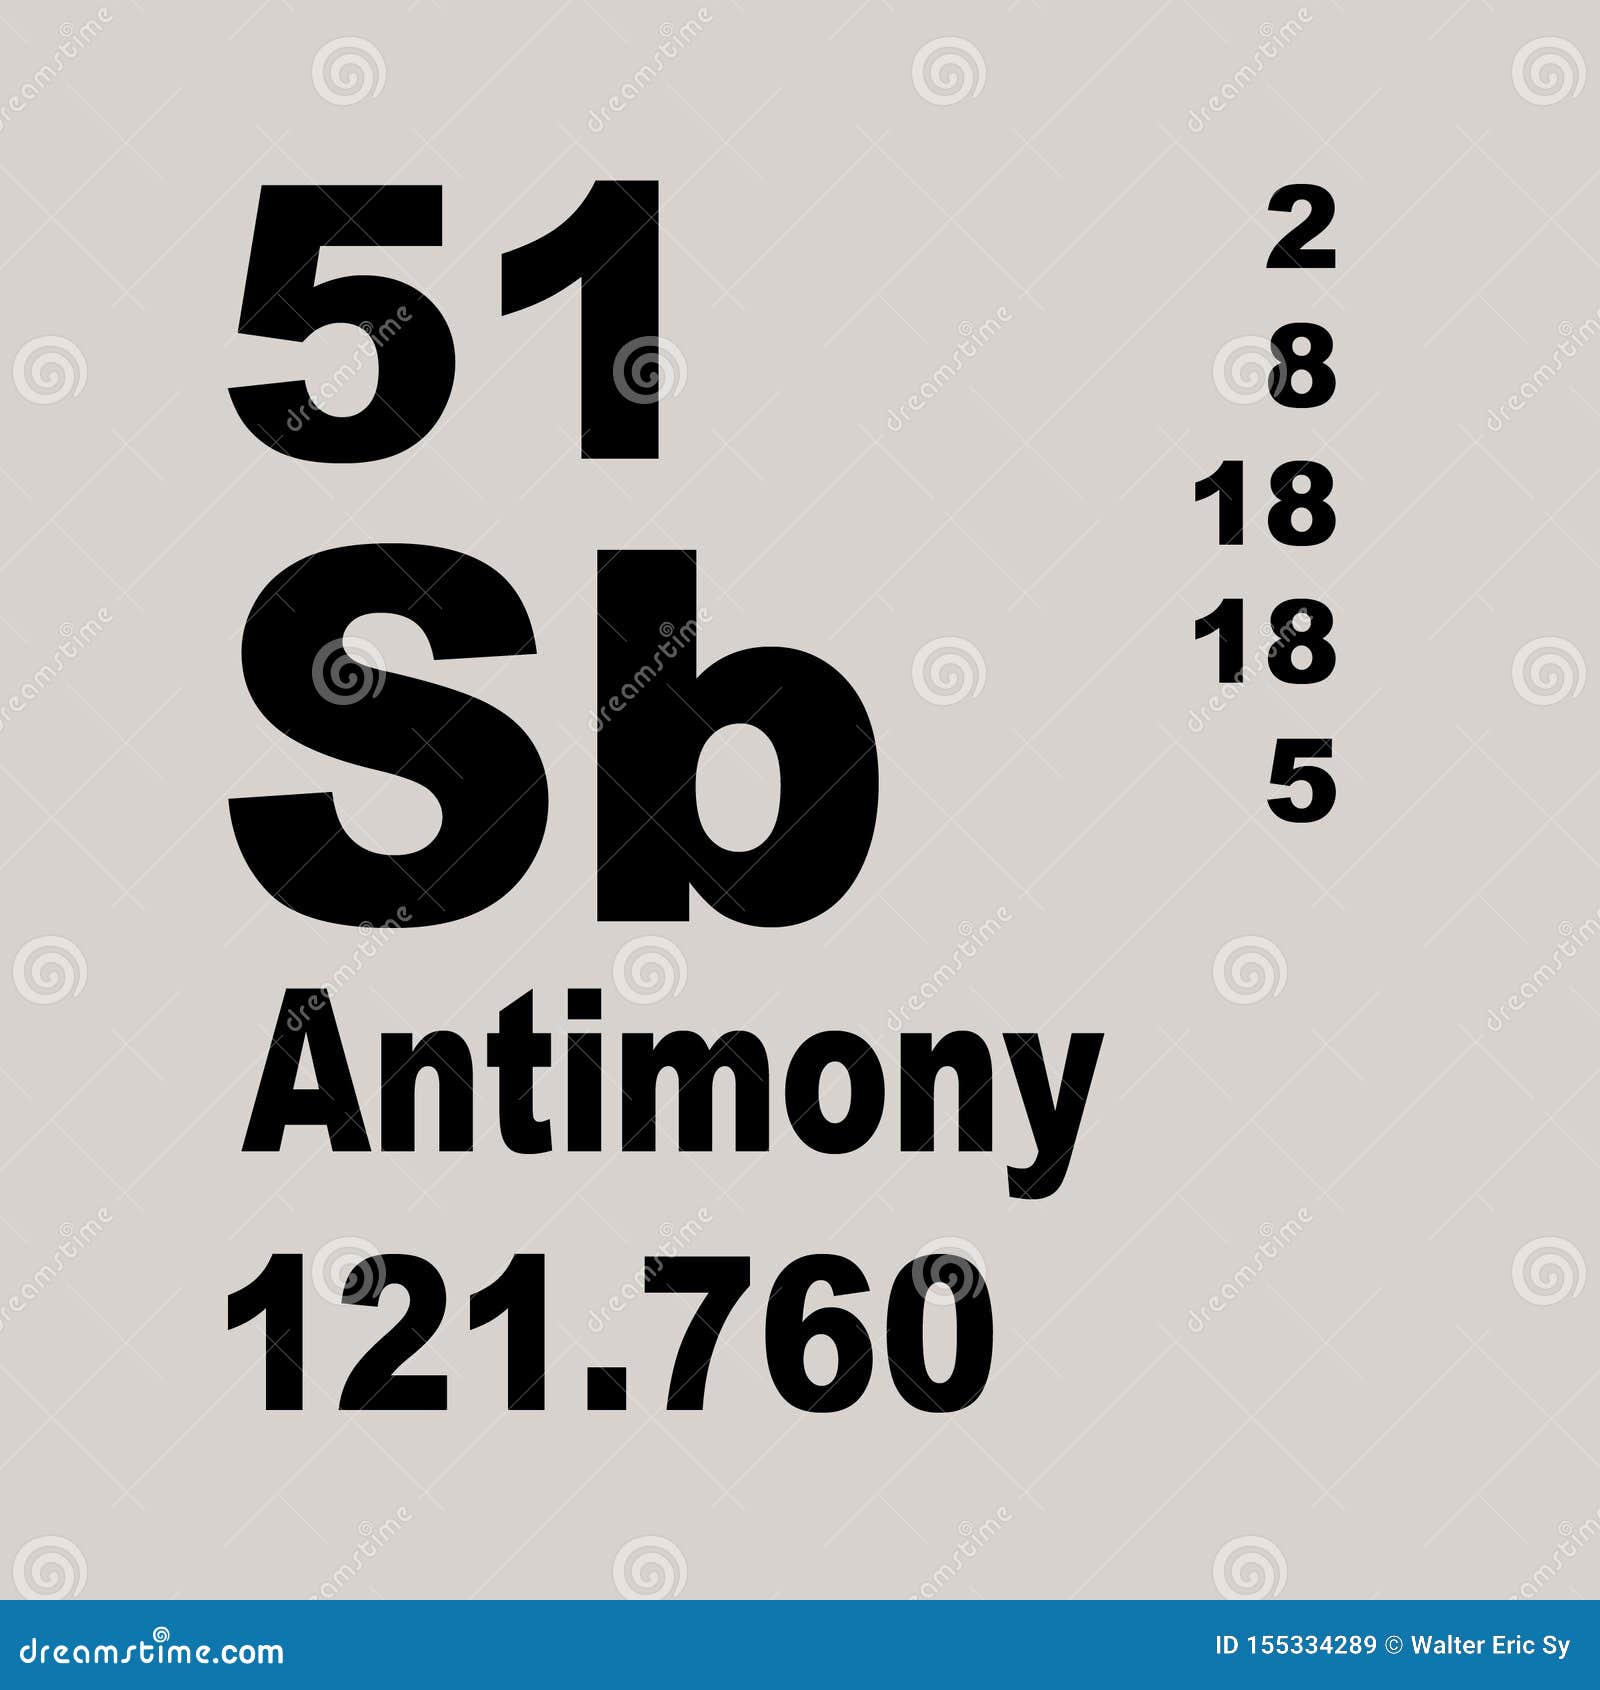 Periodic Table Of Elements Antimony Stock Illustration Illustration Of Cosmetics